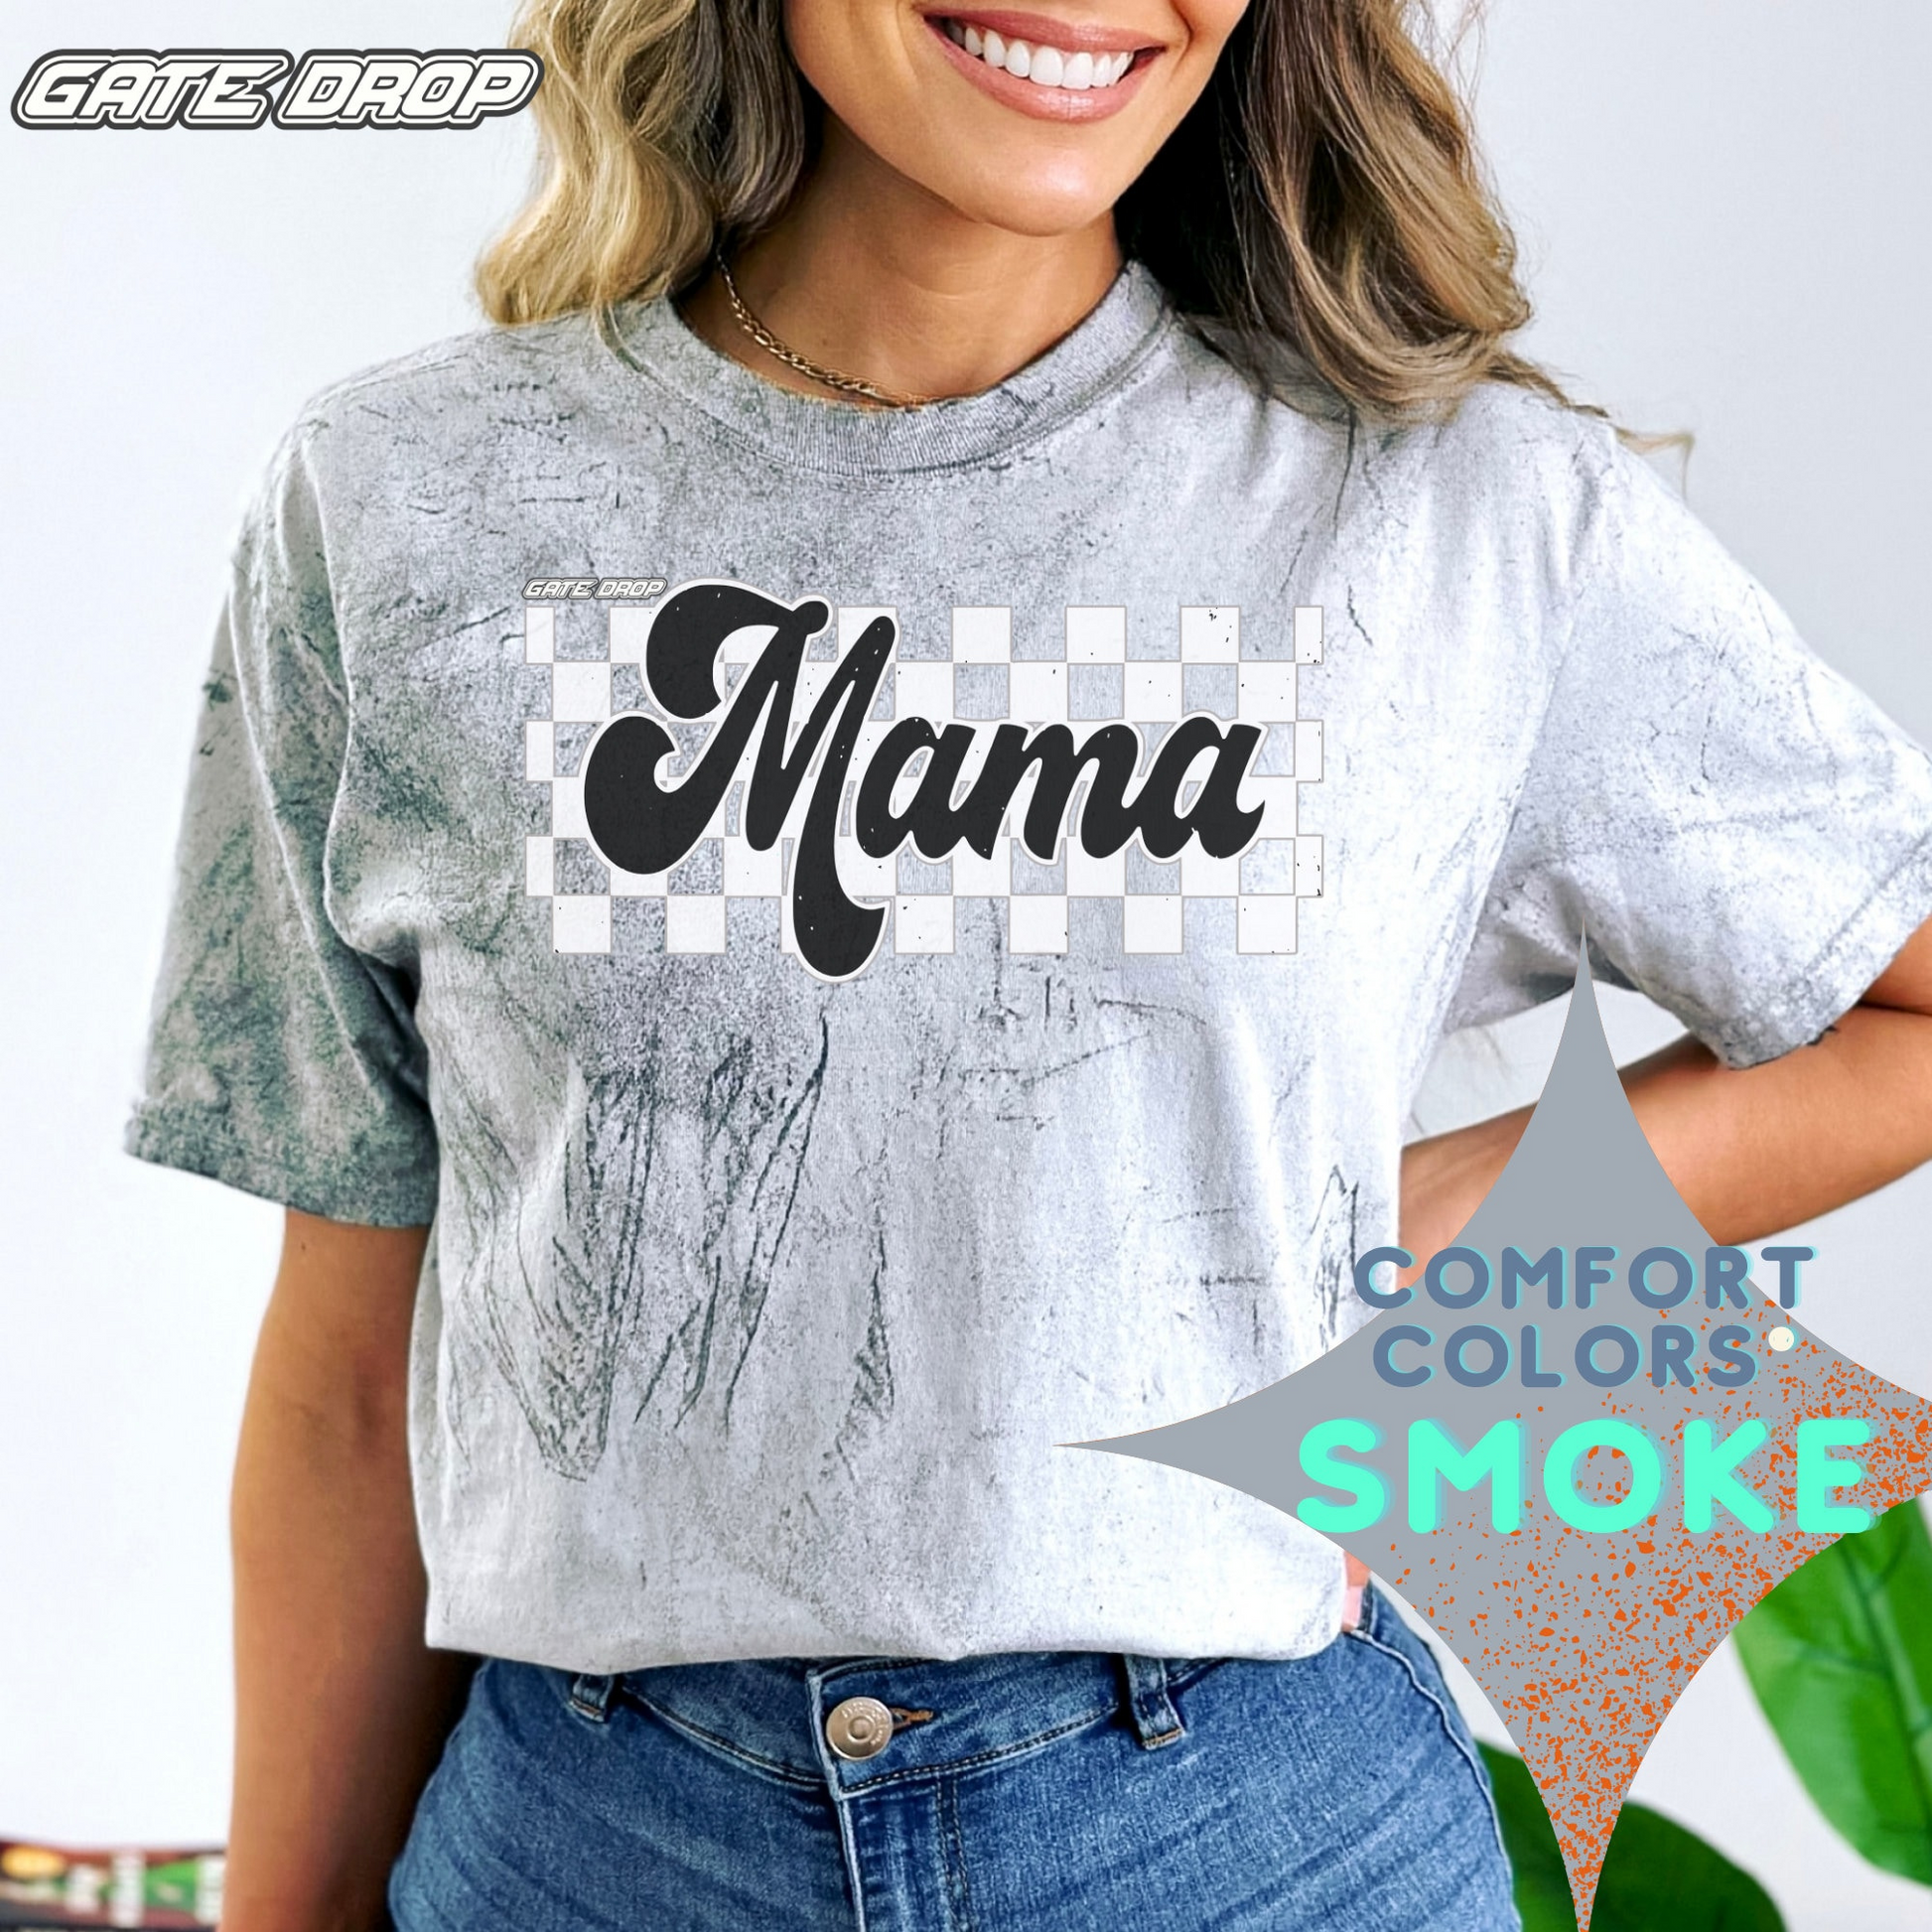 Gate Drop Race Mama Checkered Comfort Colors® shirt